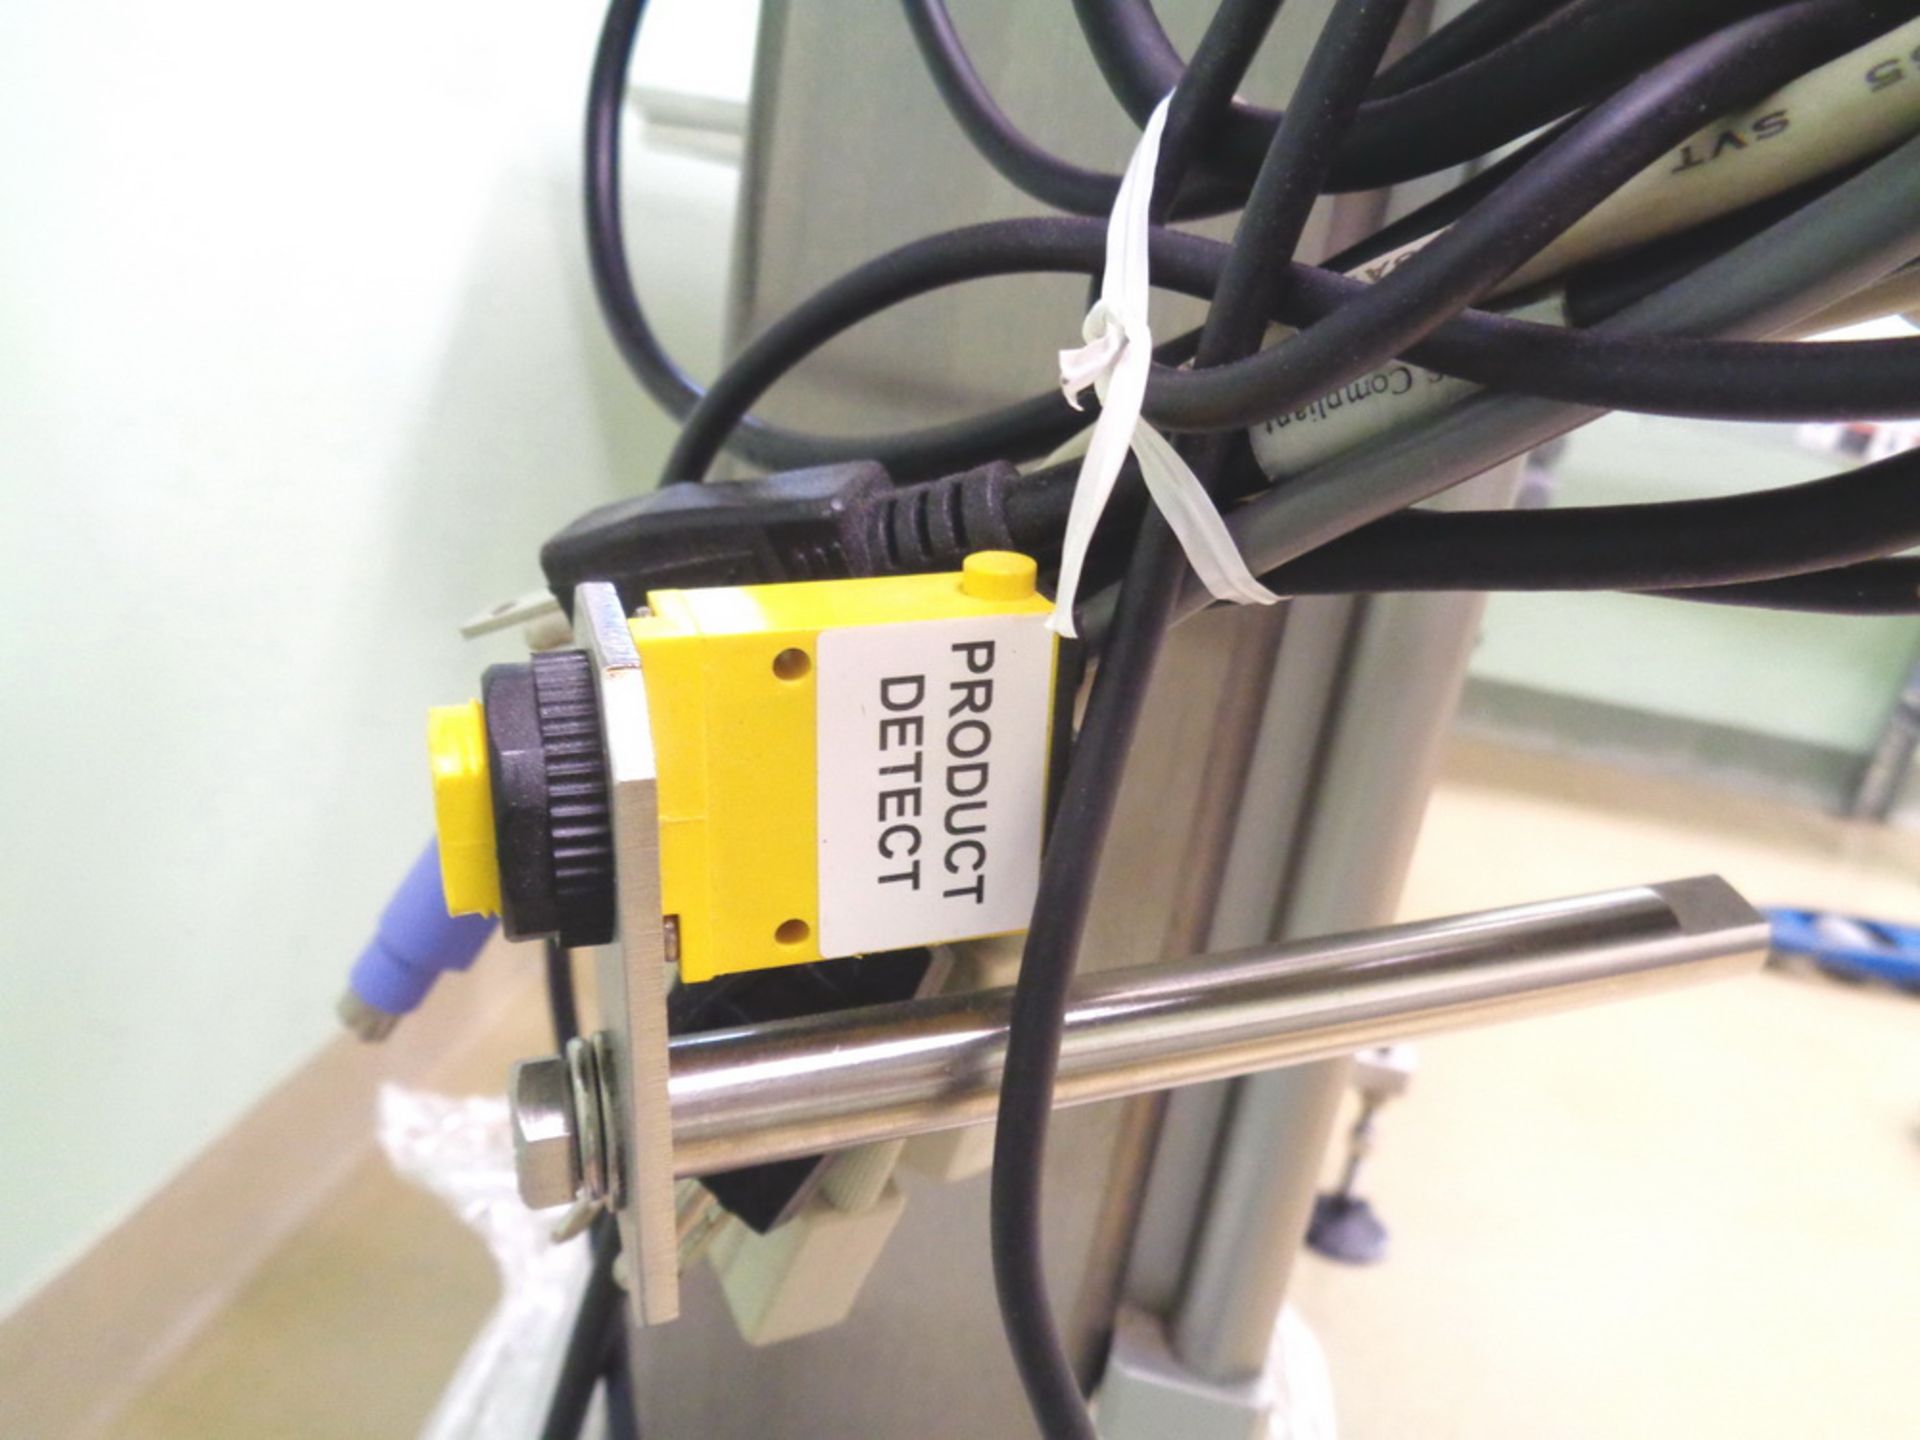 Quadrel Print and Apply Pressure Sensitive Carton Labeler, Model Q31-LS8490, S/N 57957-01 - Image 9 of 11